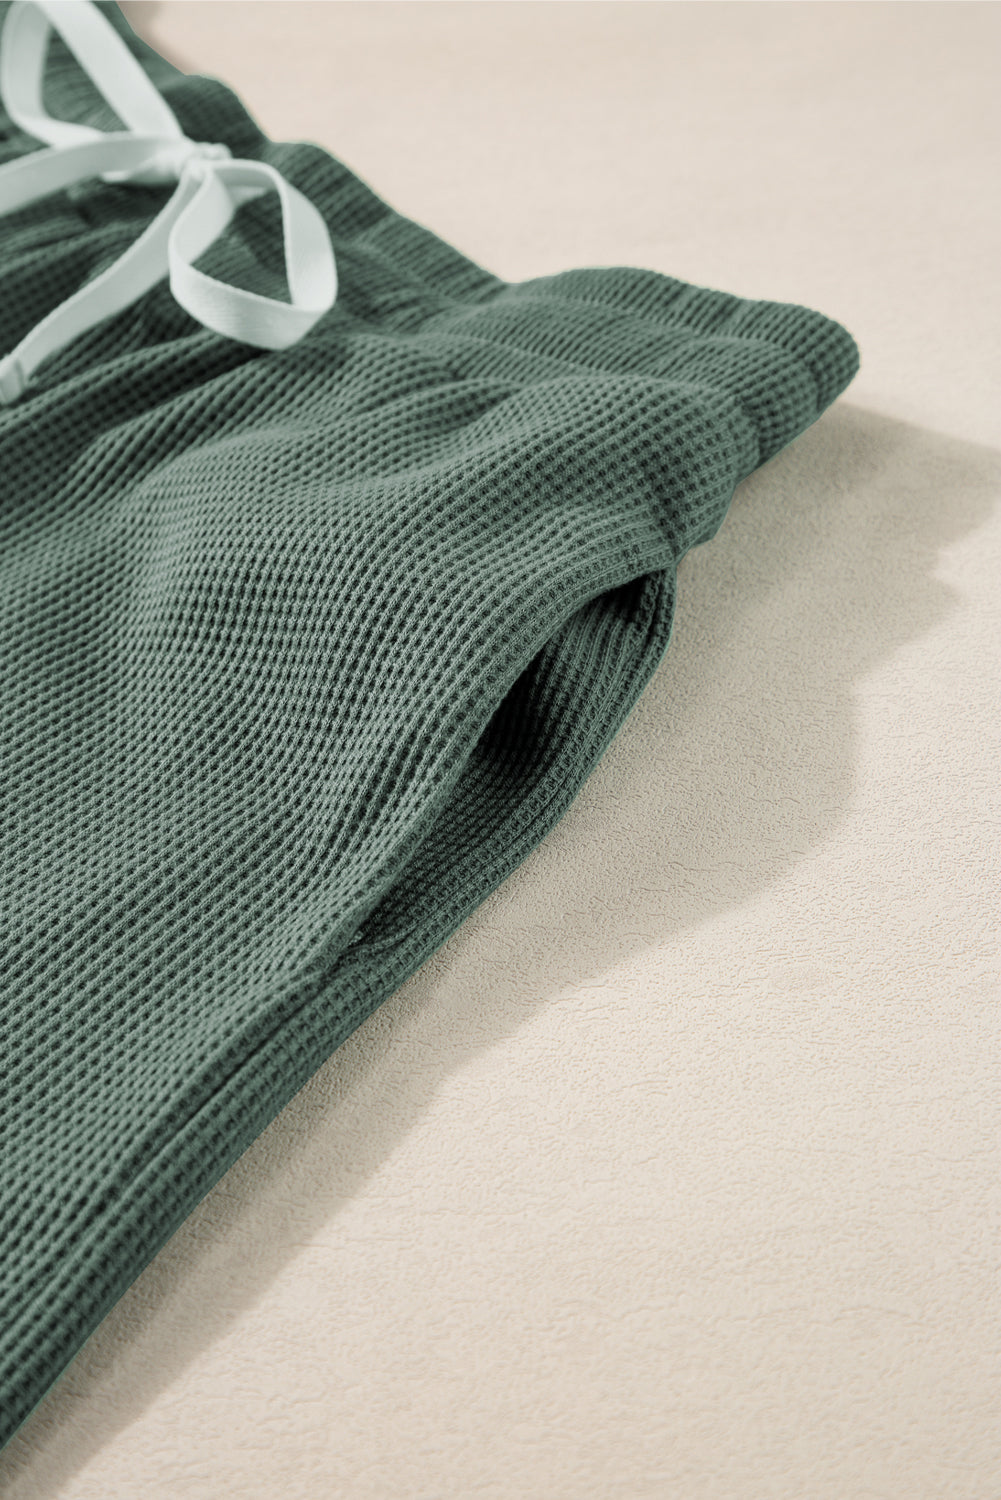 Mist Green Waffle Knit Patched Pocket Tank and Drawstring Shorts Set Short Sets JT's Designer Fashion